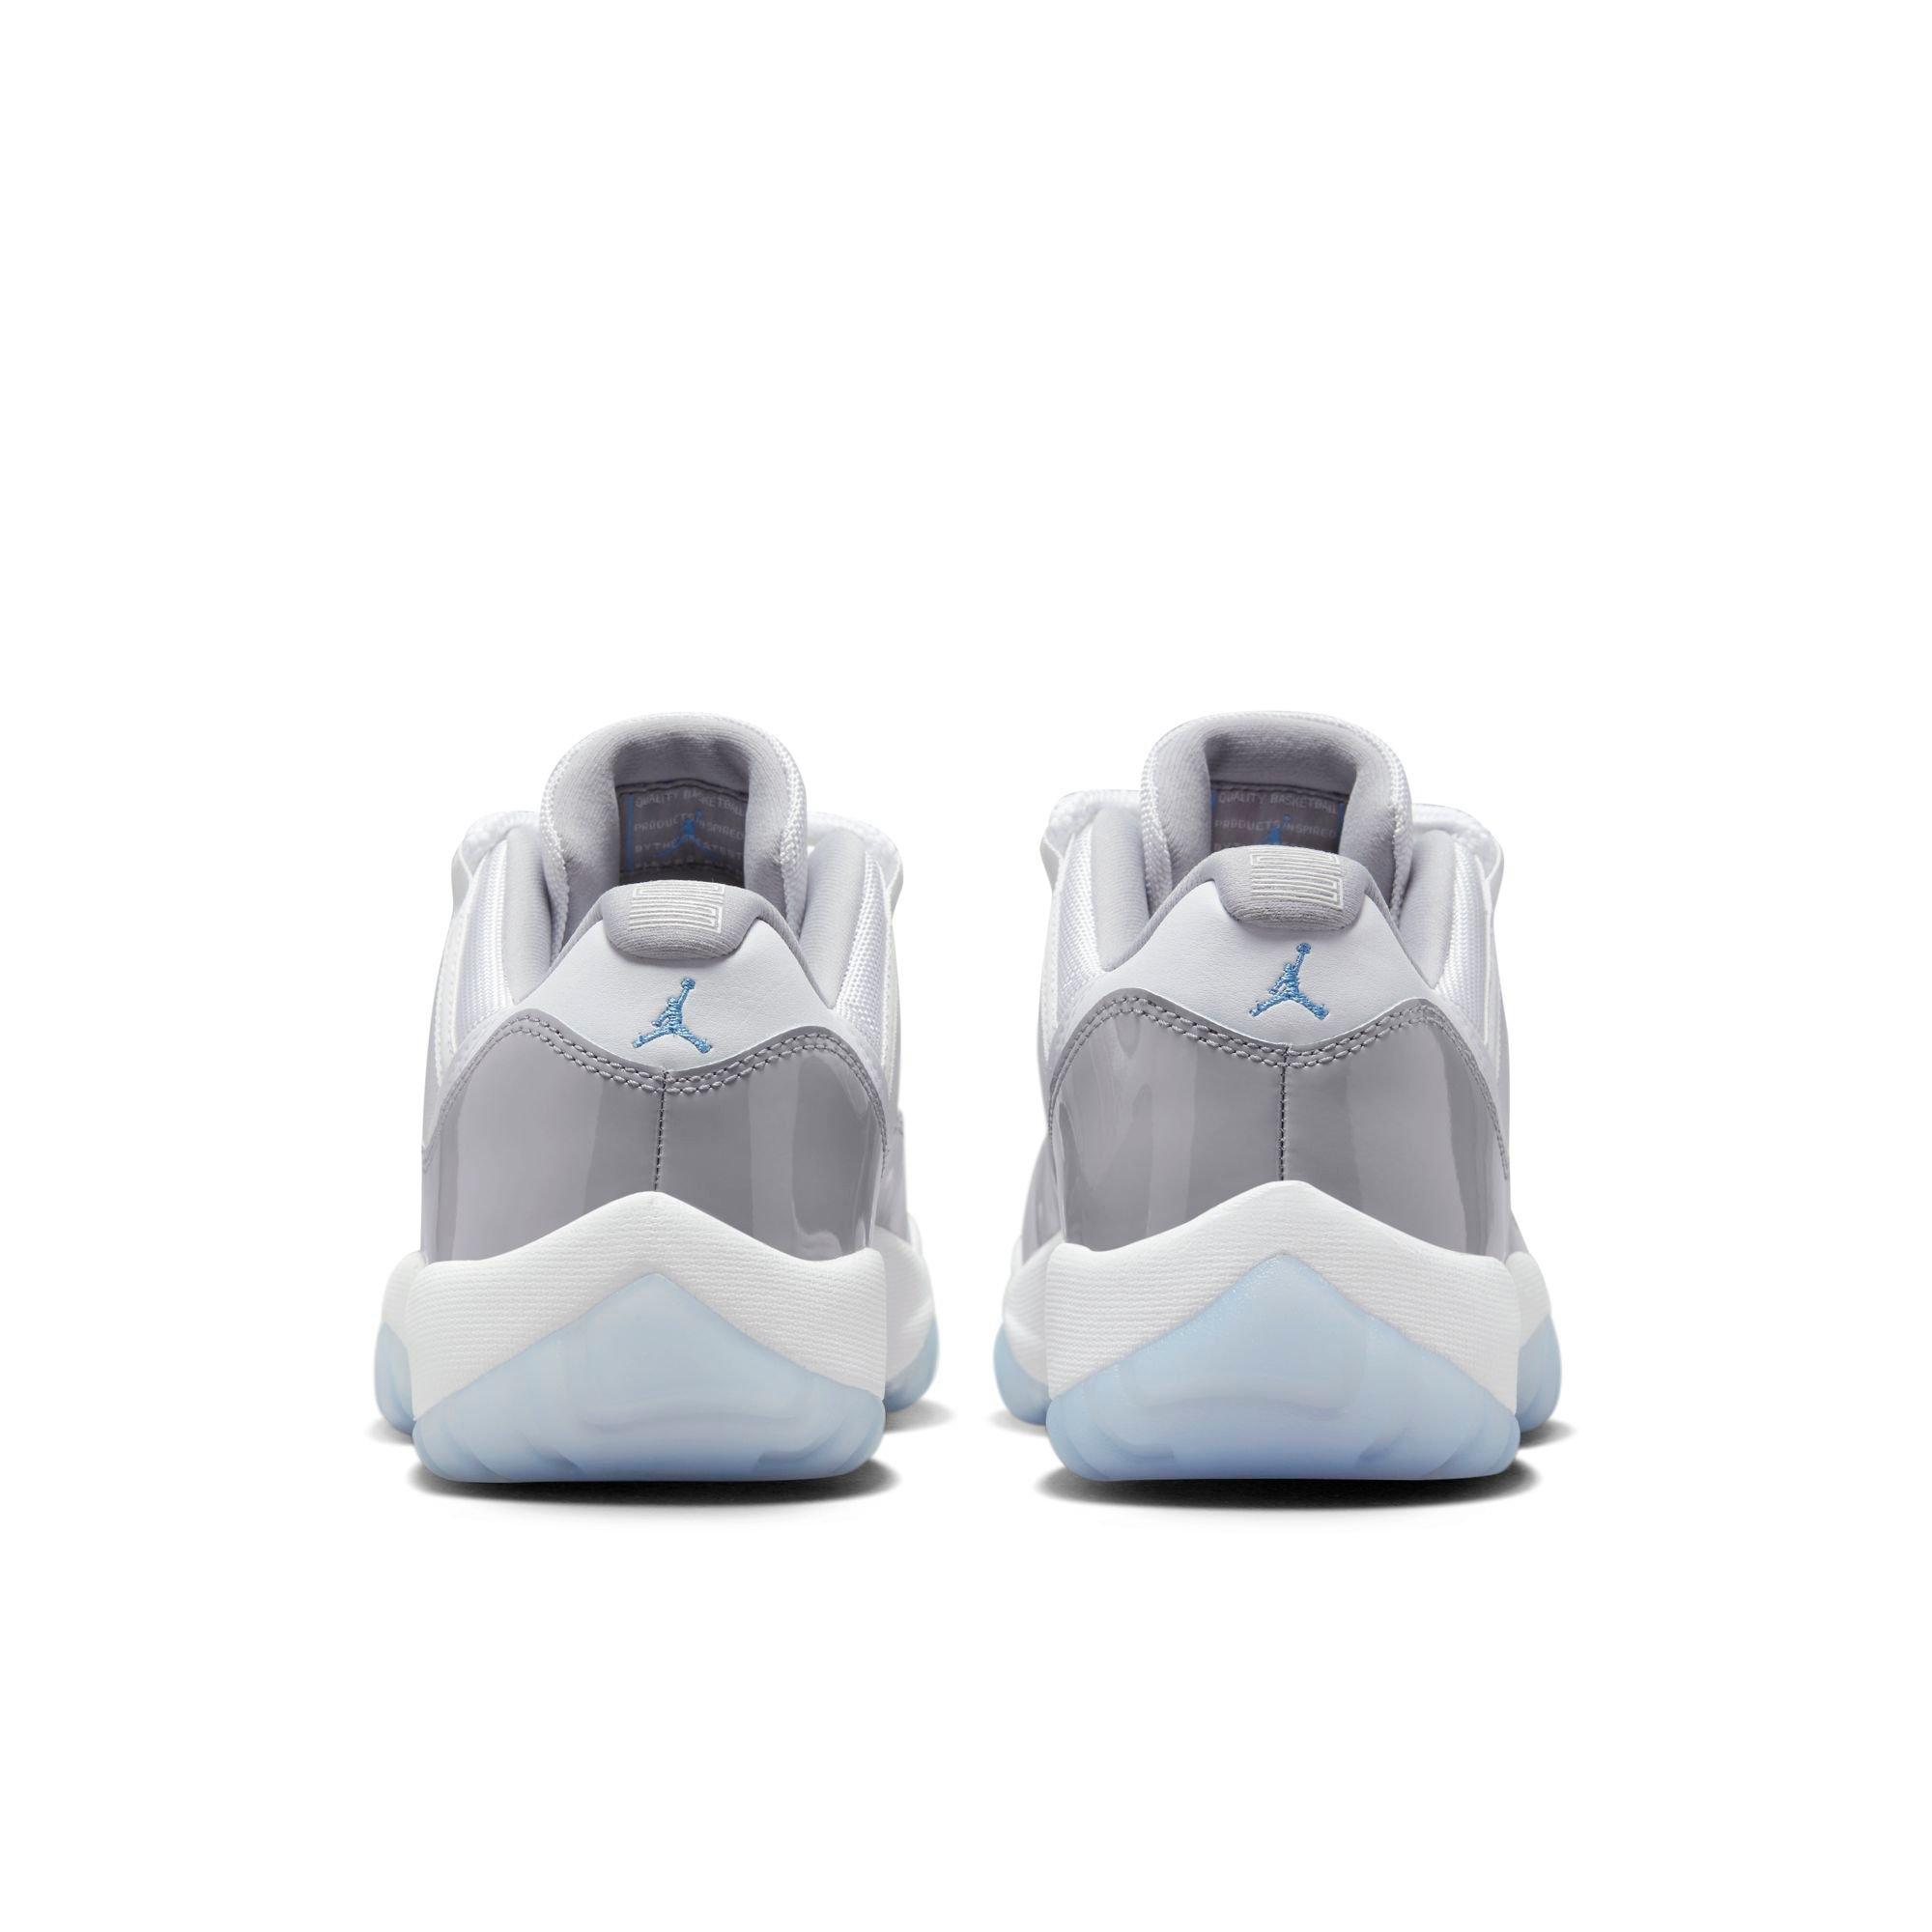 Jordan 11 Retro Low “Cement Grey” Men’s &  Kids’ Shoe Launching 4/1